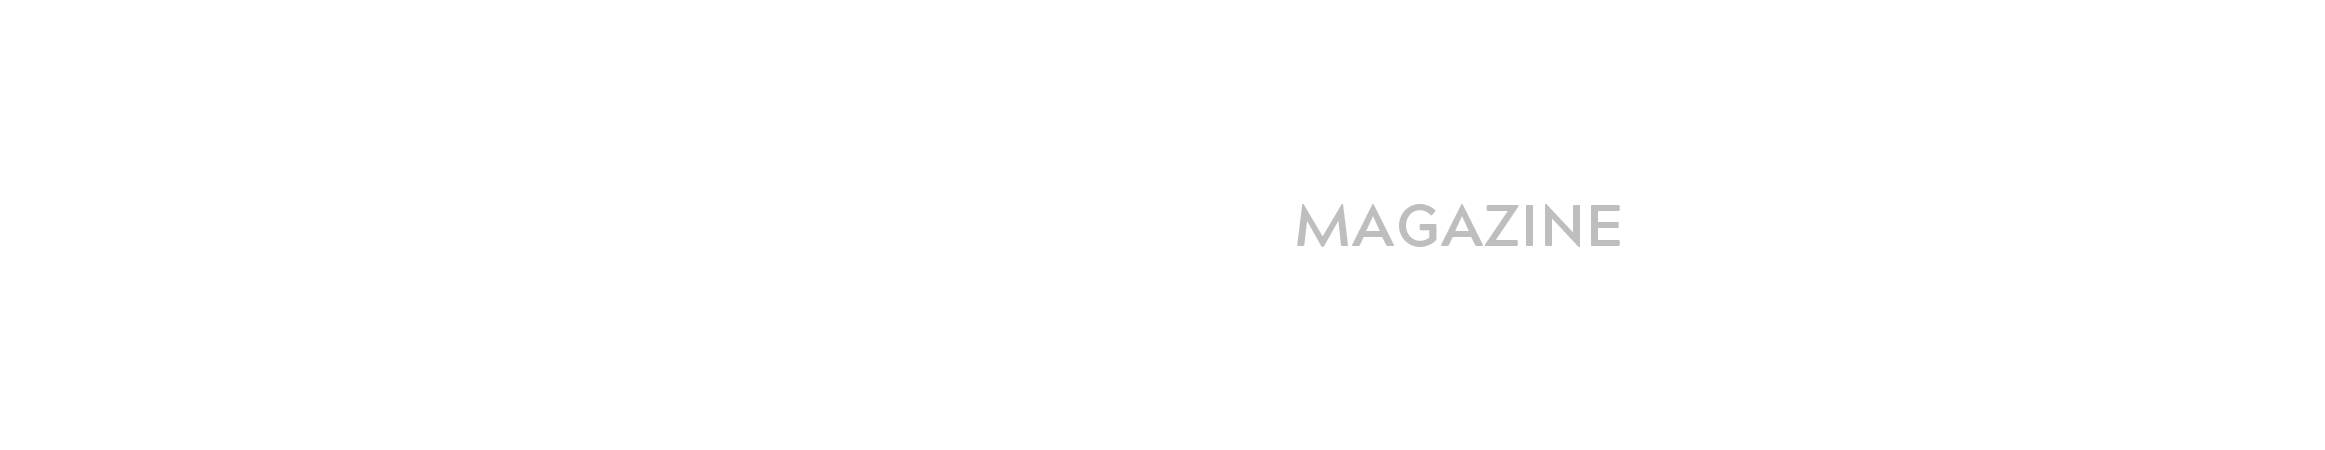 Tracks Magazine Logo